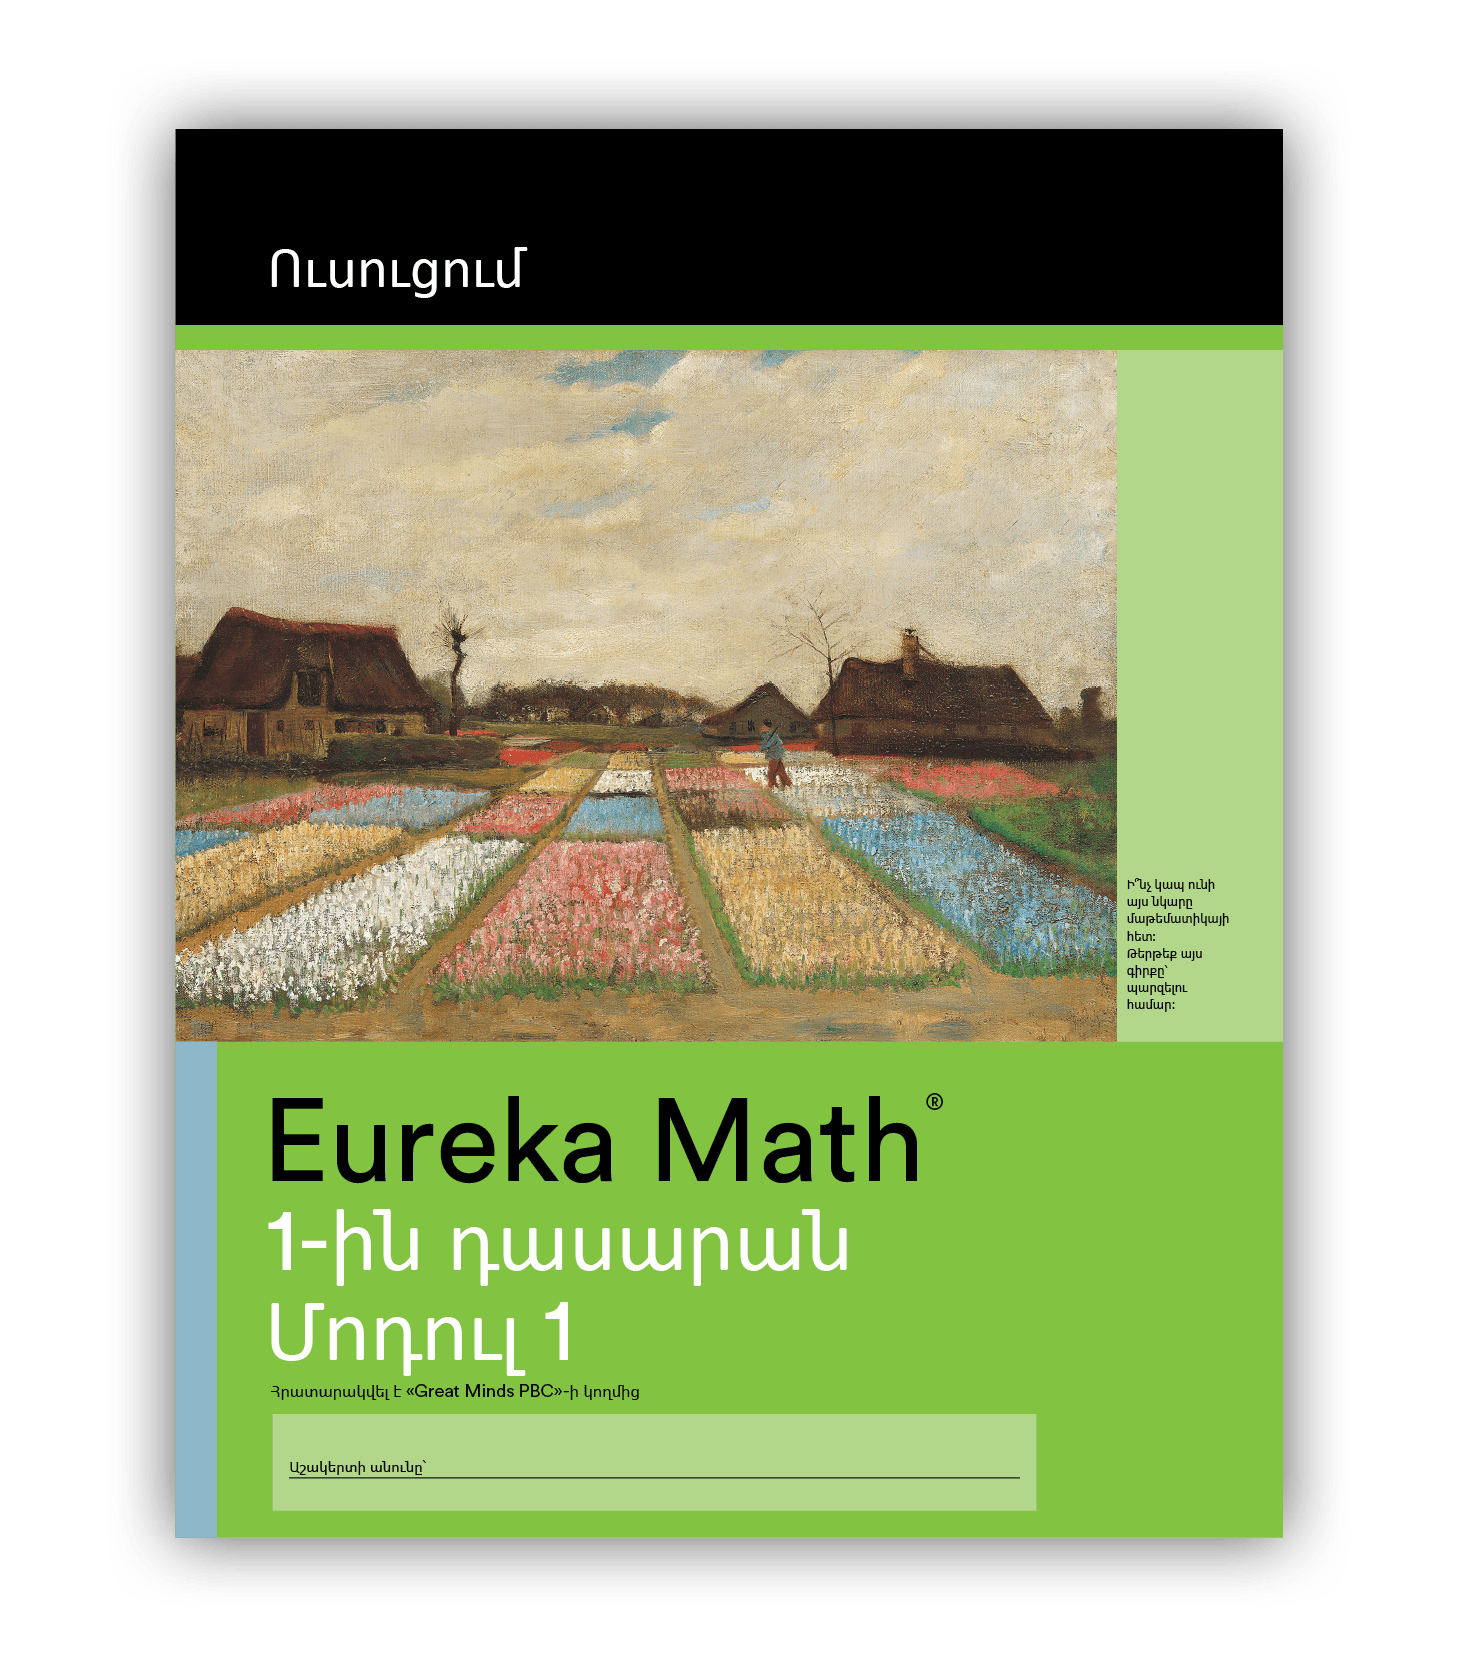 Eureka Math Learn Book in Armenian for Grade 1